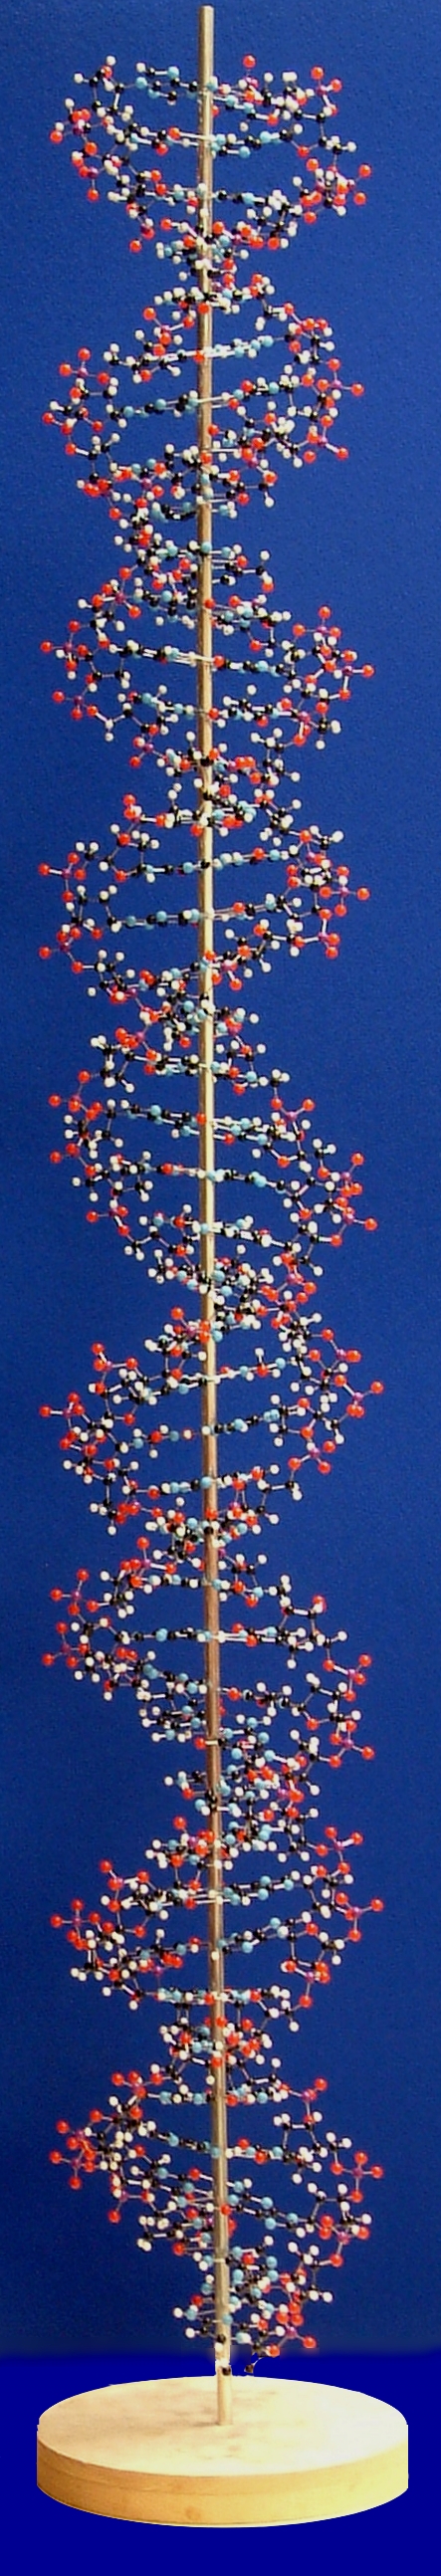 Tall long molecular model of DNA Deoxyribose nucleic acid